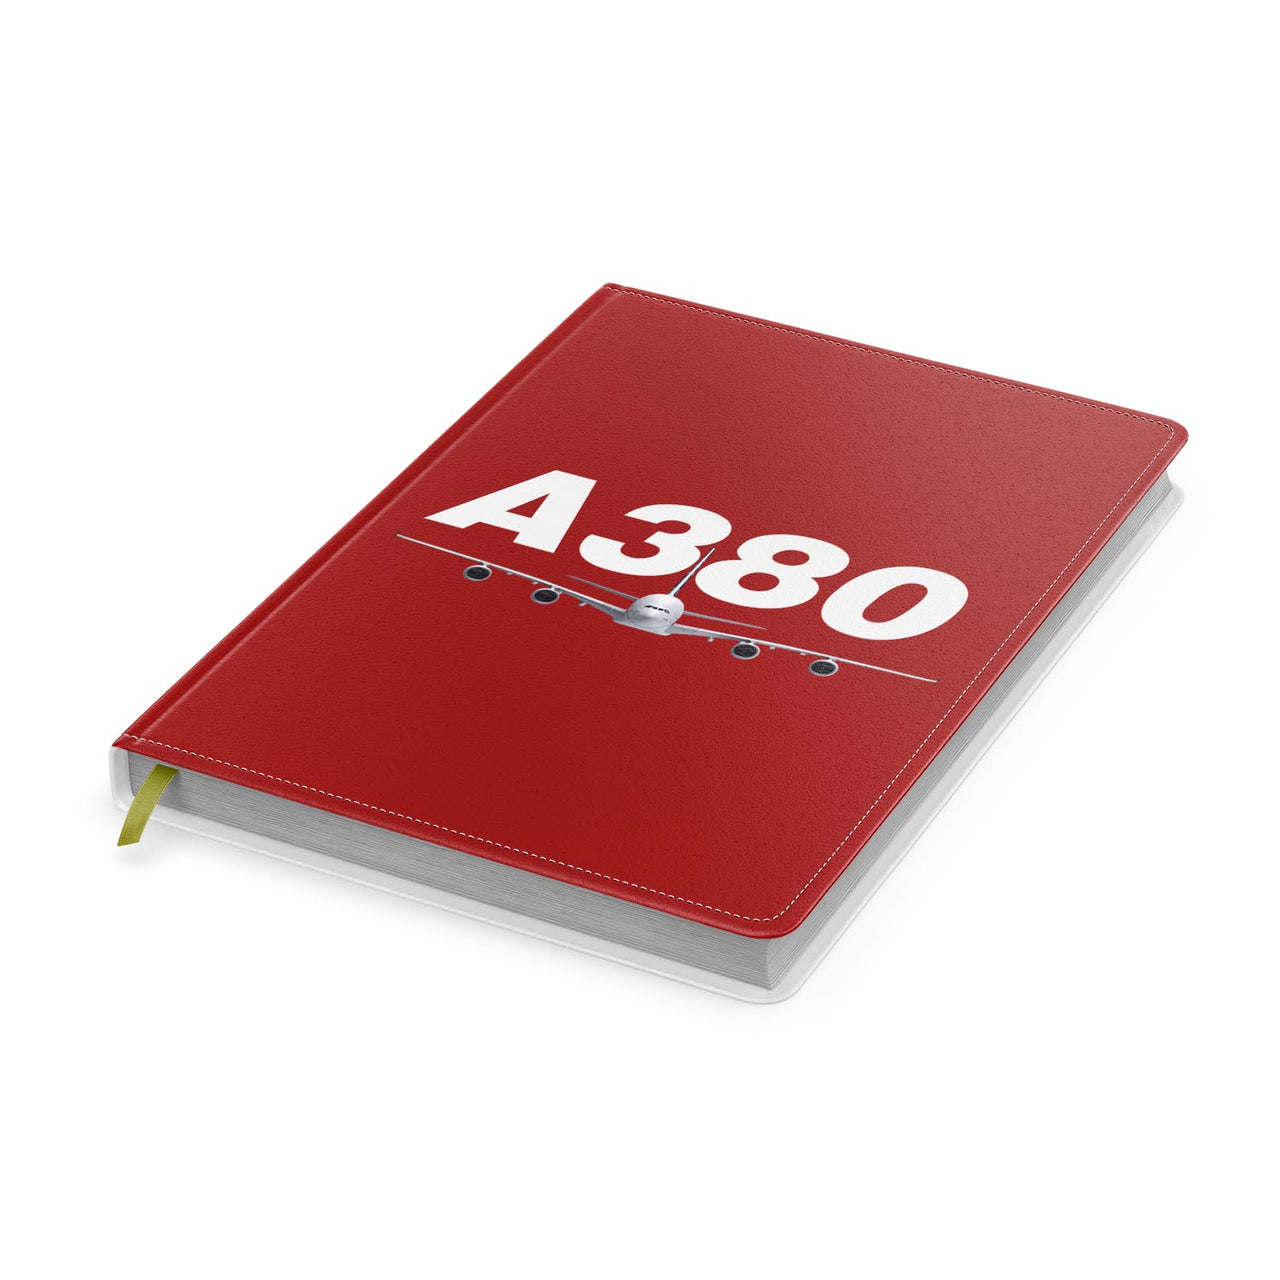 Super Airbus A380 Designed Notebooks